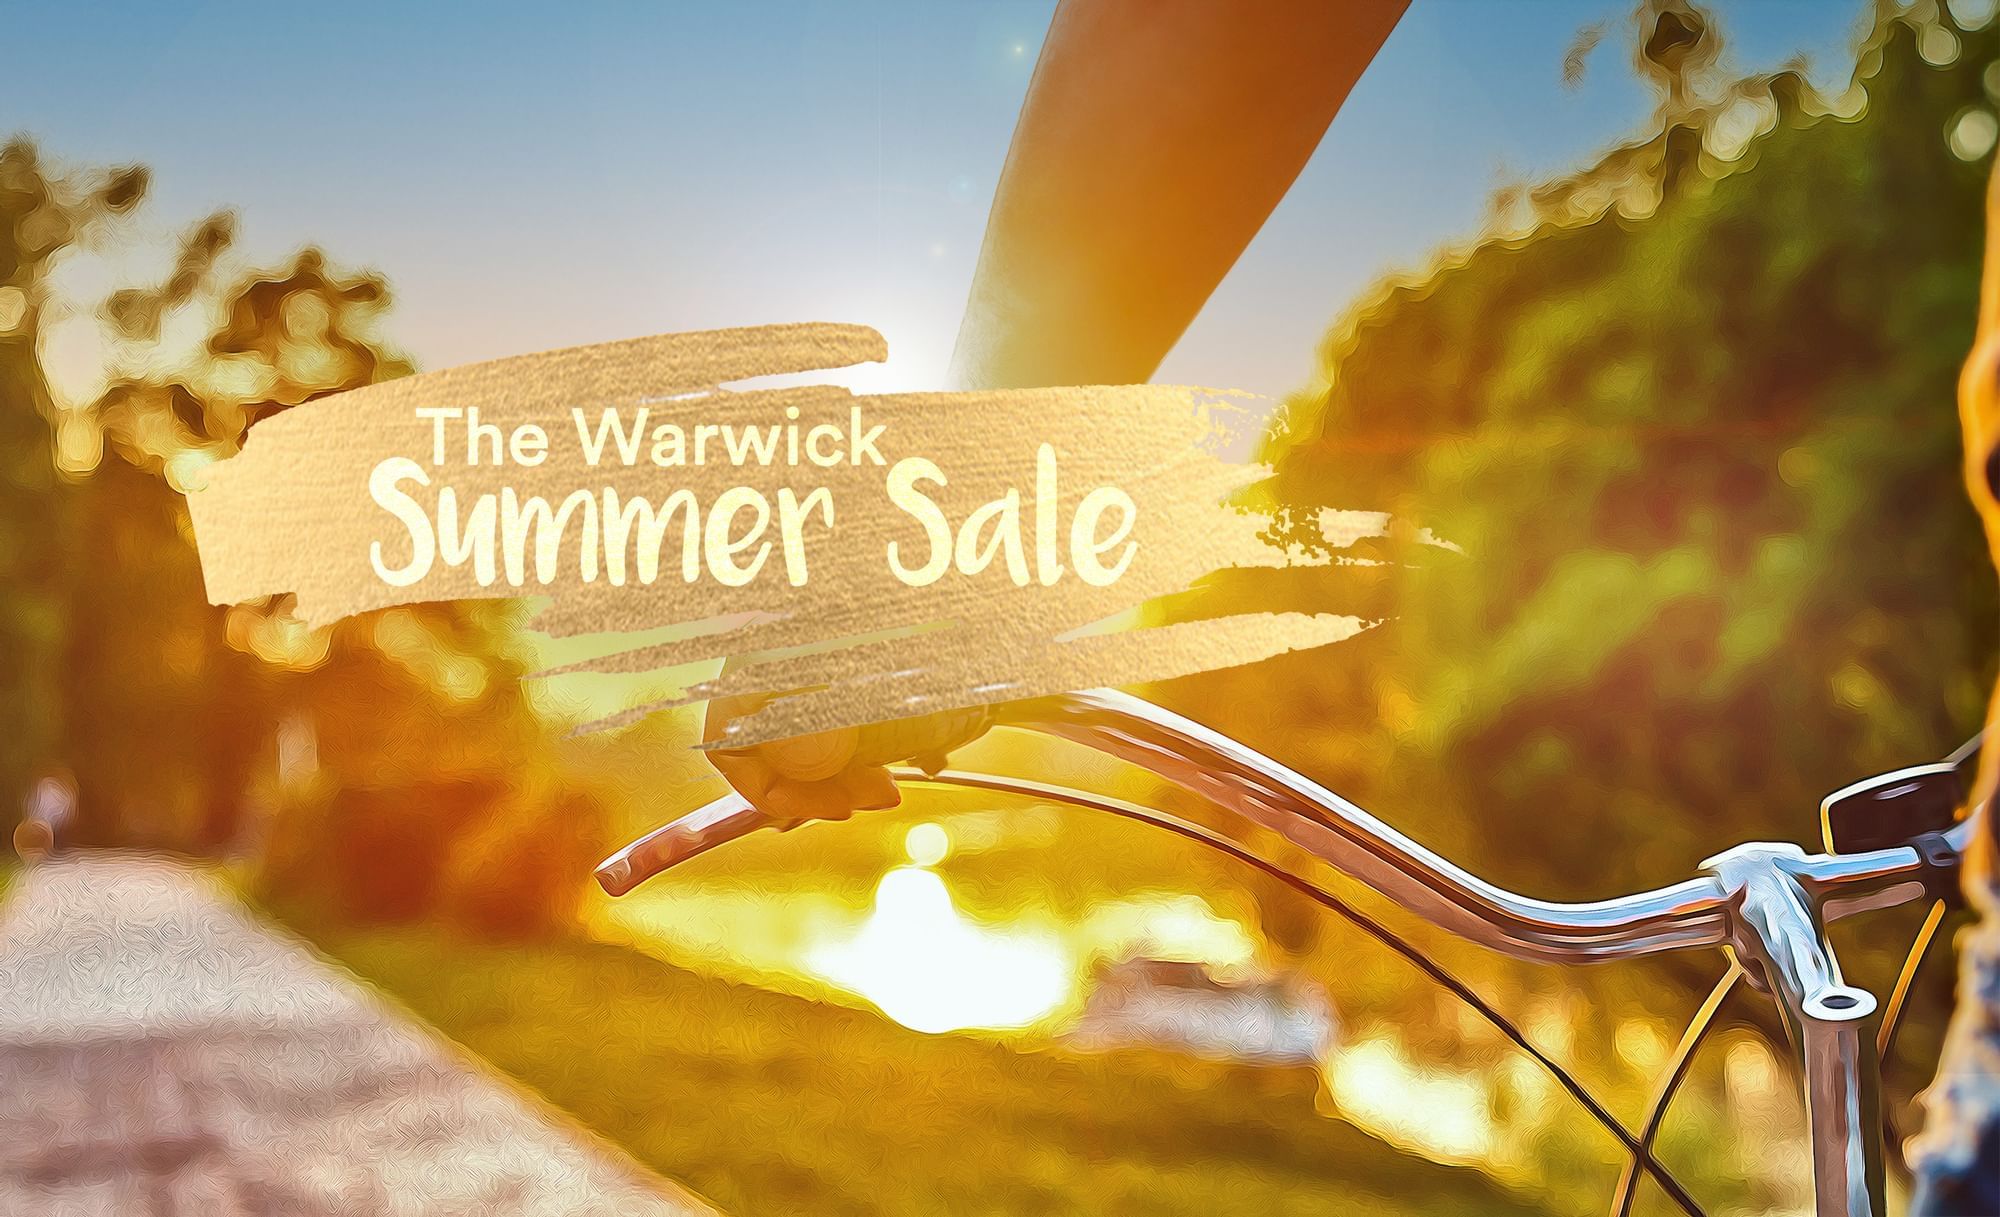 The Warwick summer sale